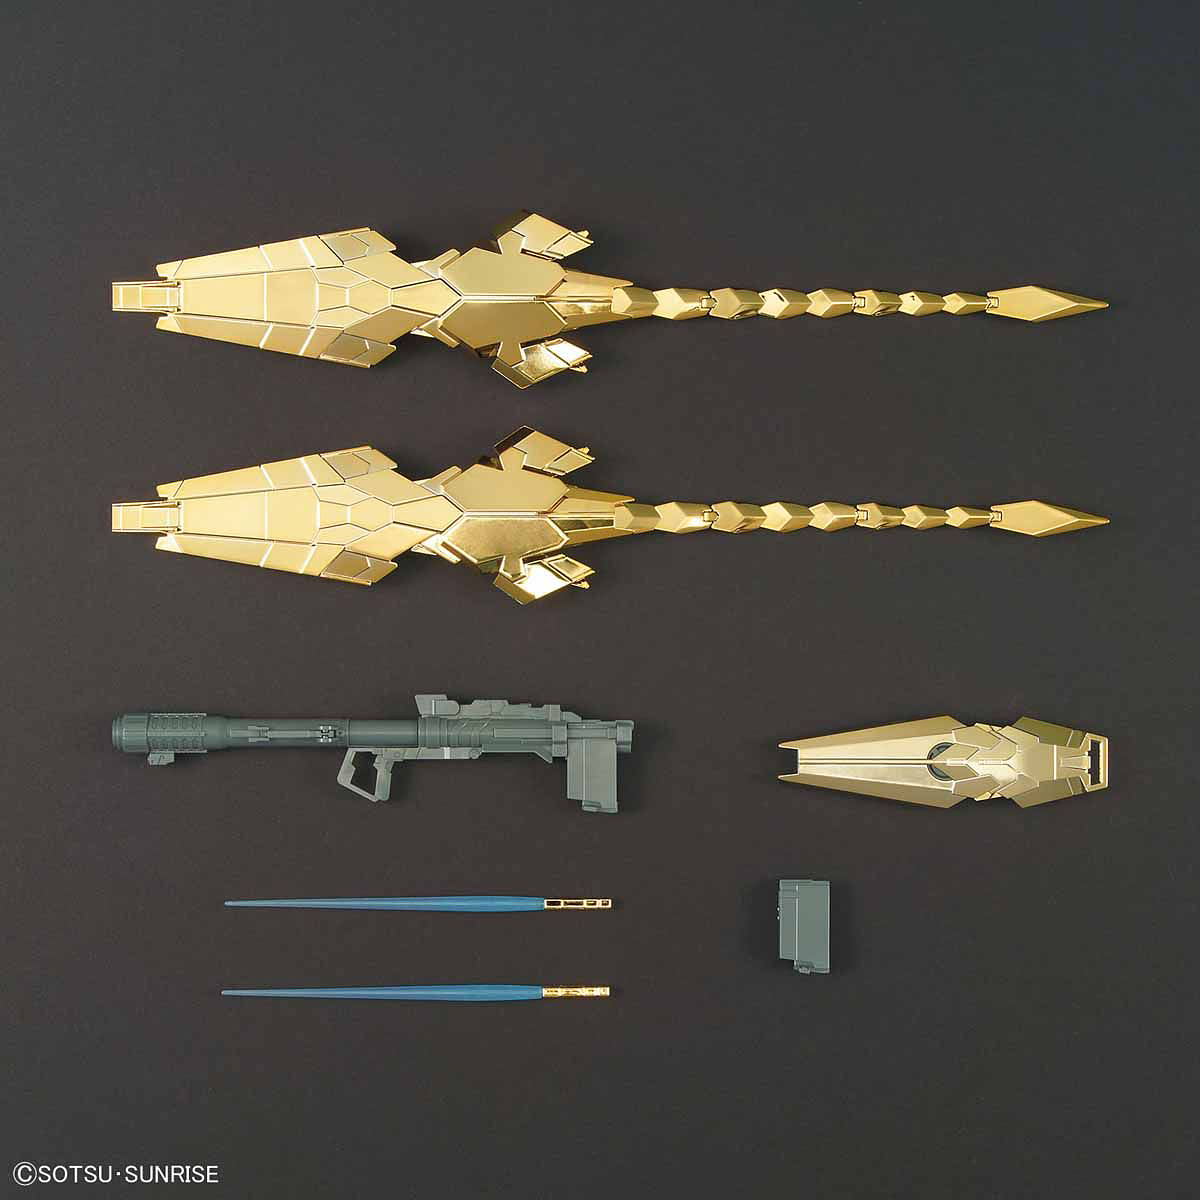 HG Gundam Unicorn Unit 3 Phenex (Unicorn mode)(Narrative ver.)[Gold coating] 1/144 - gundam-store.dk